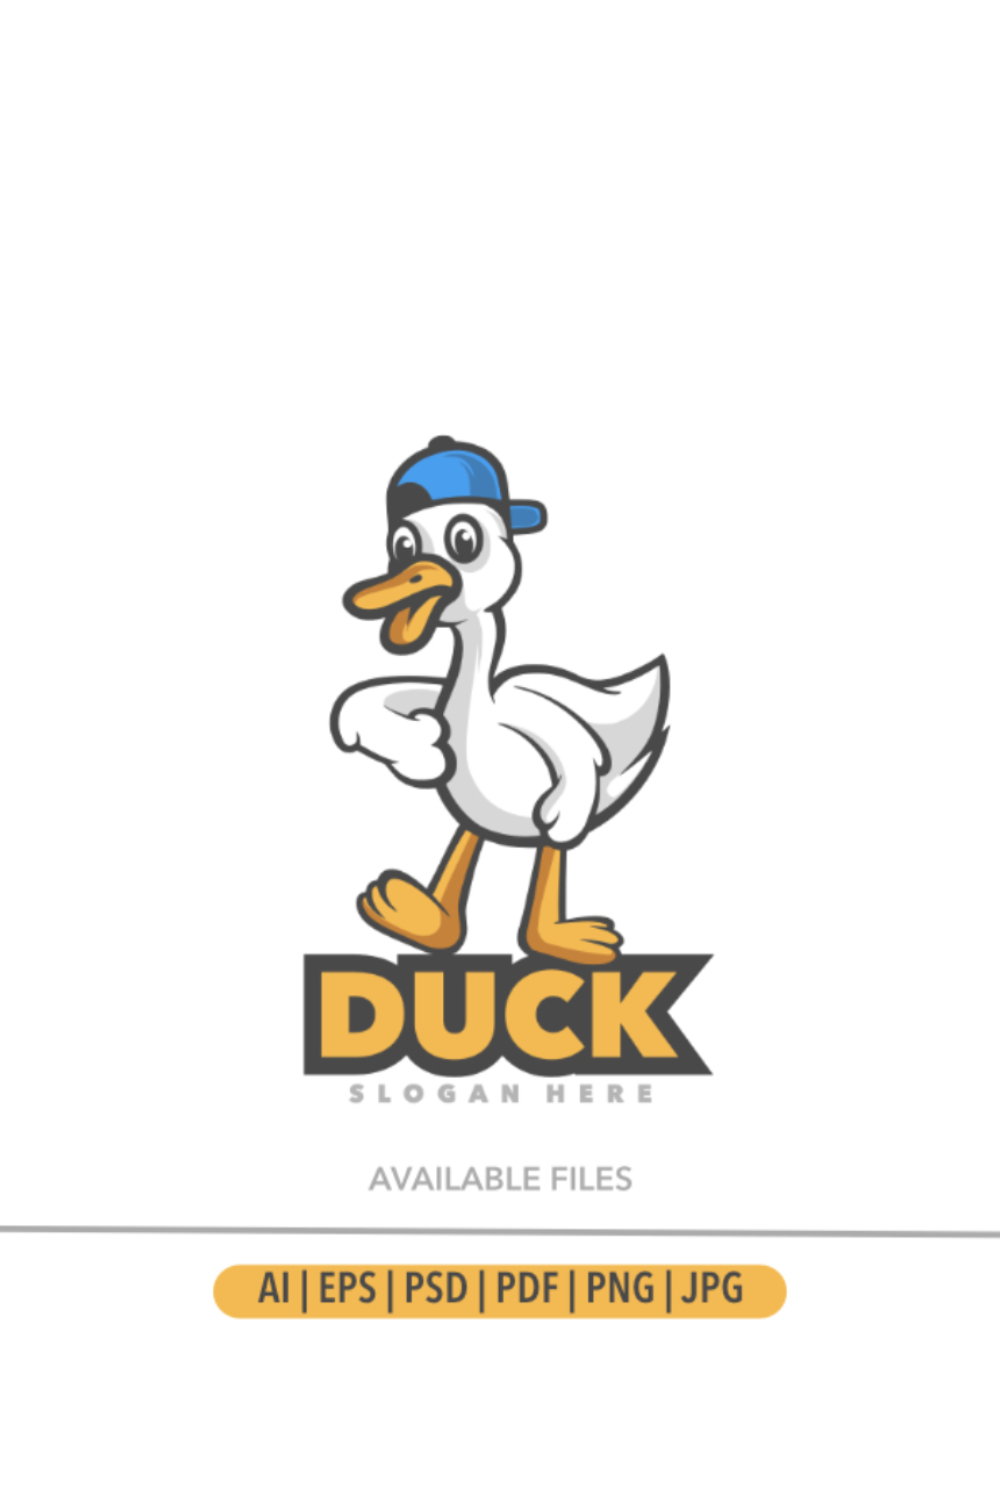 Duck mascot logo template pinterest preview image.